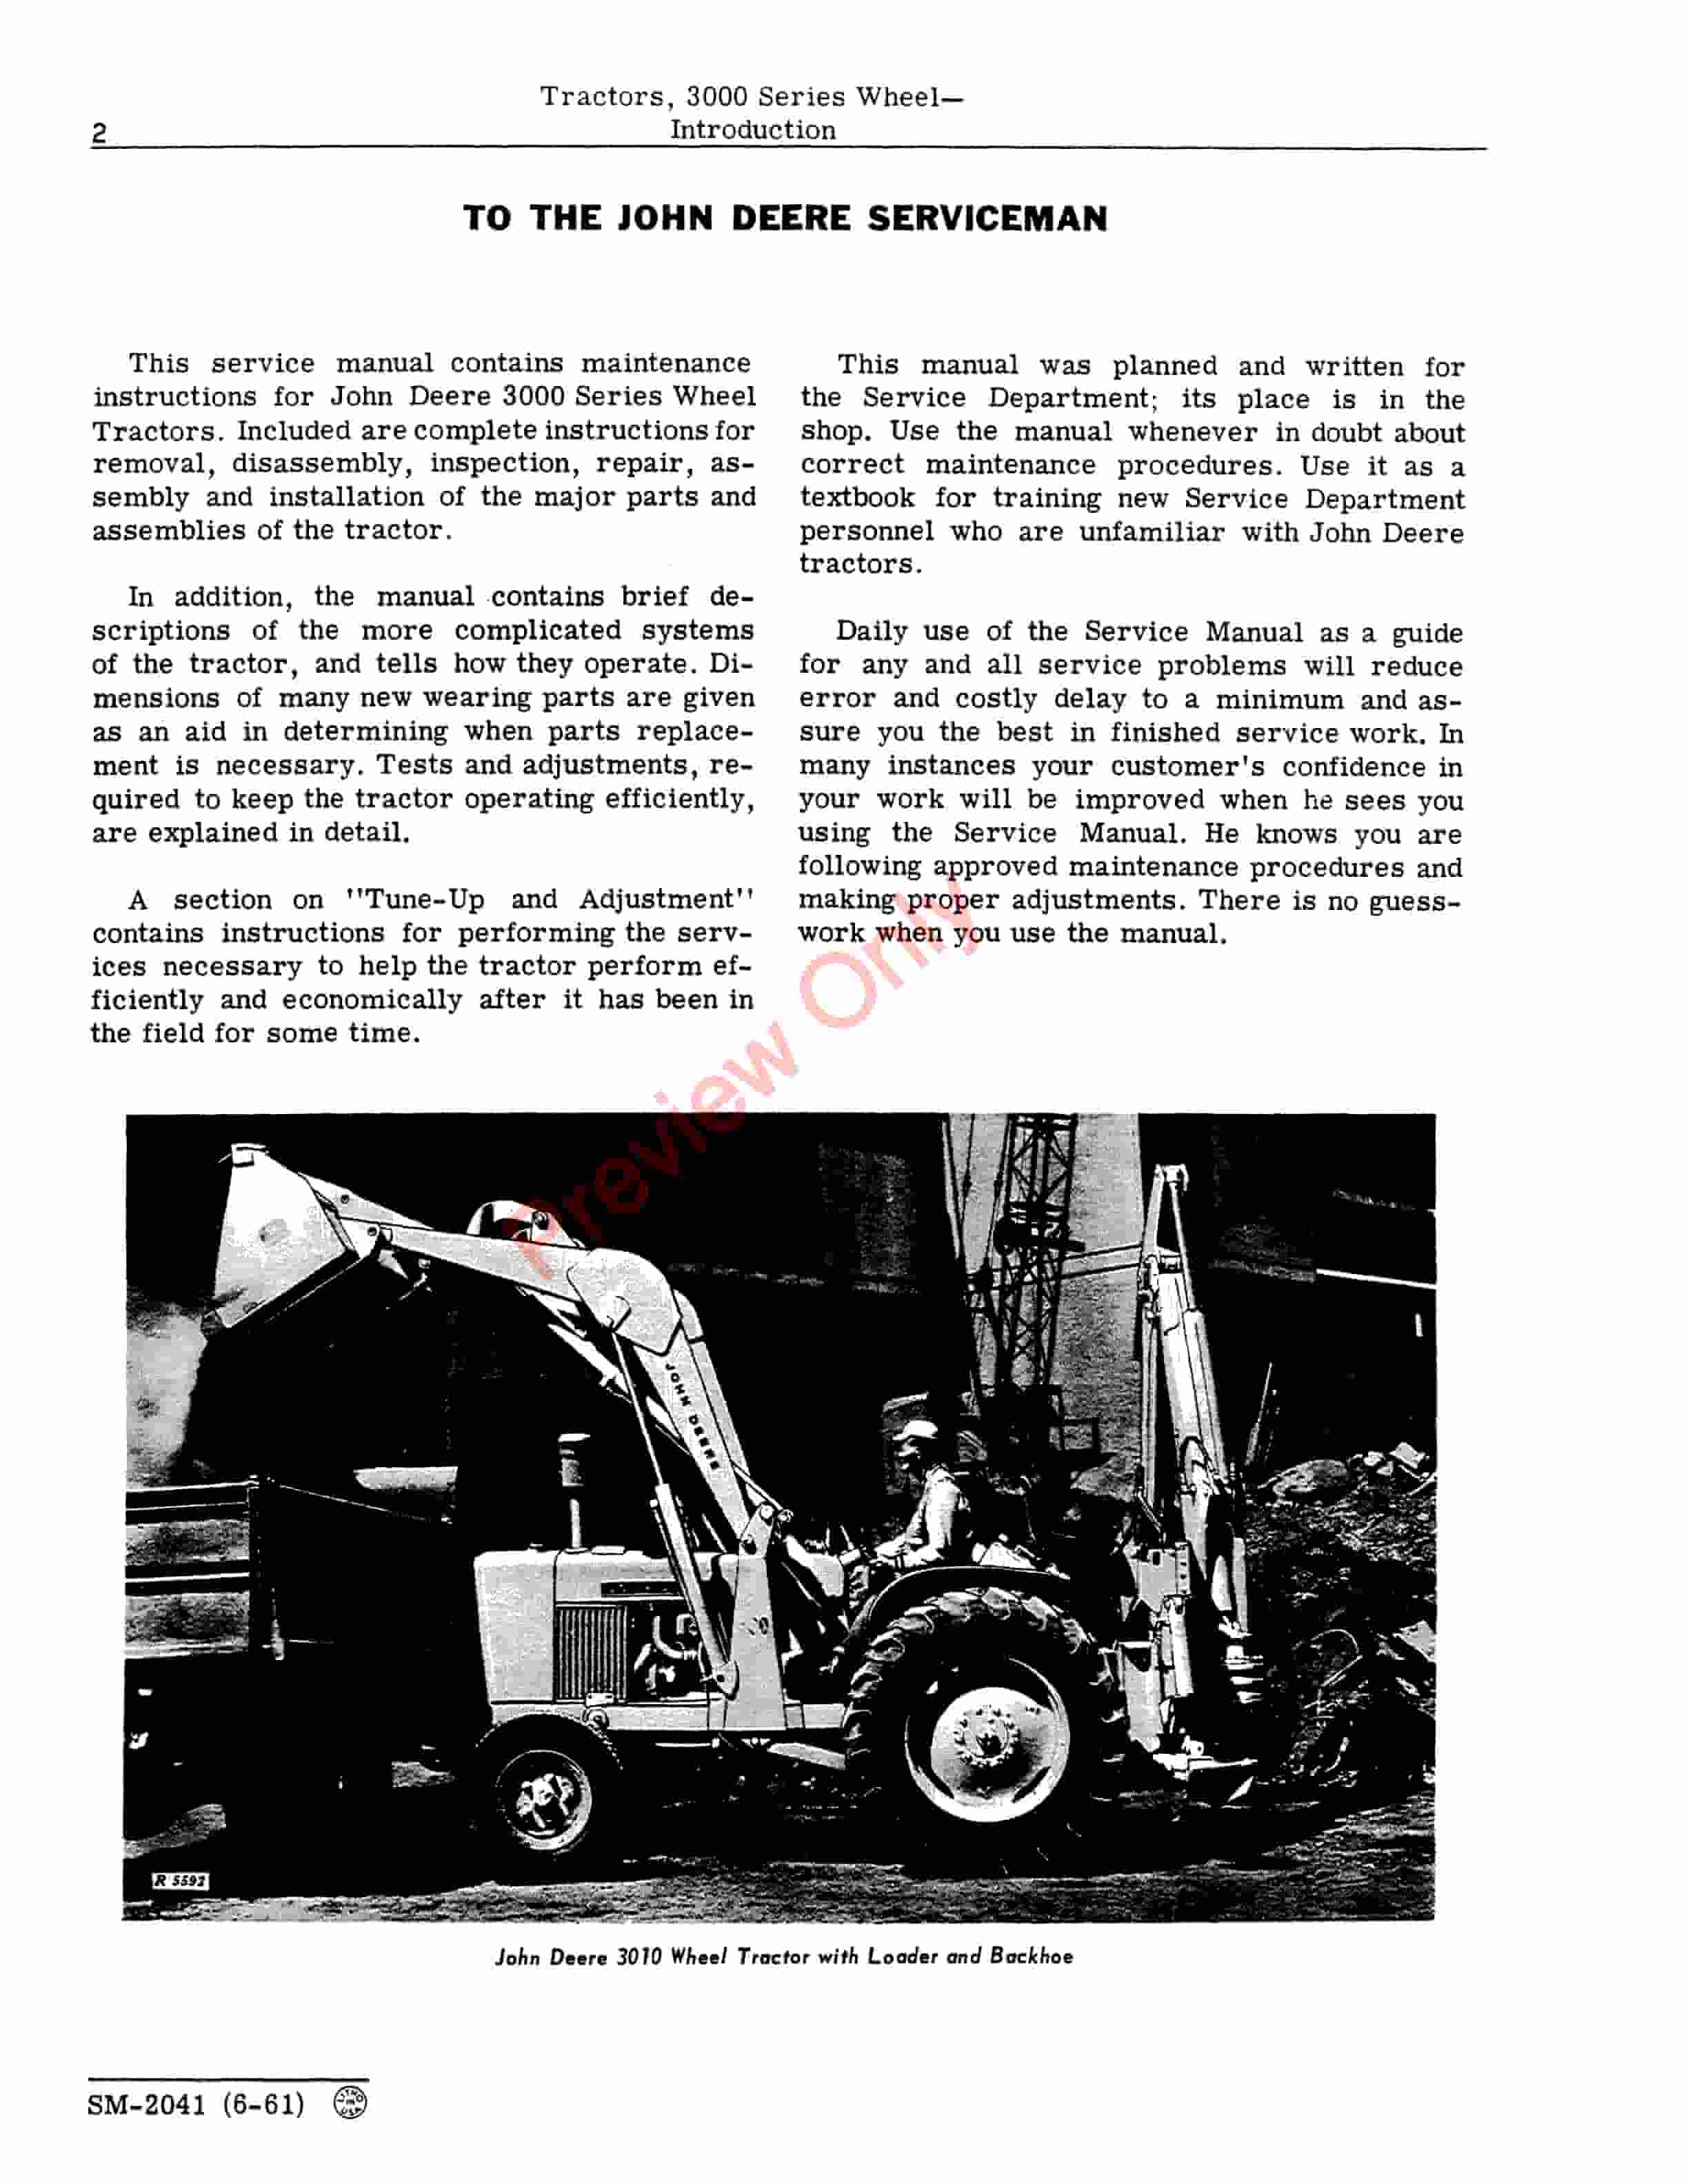 John Deere 3010 Wheel Tractor Service Manual SM2041 01JUN61 4